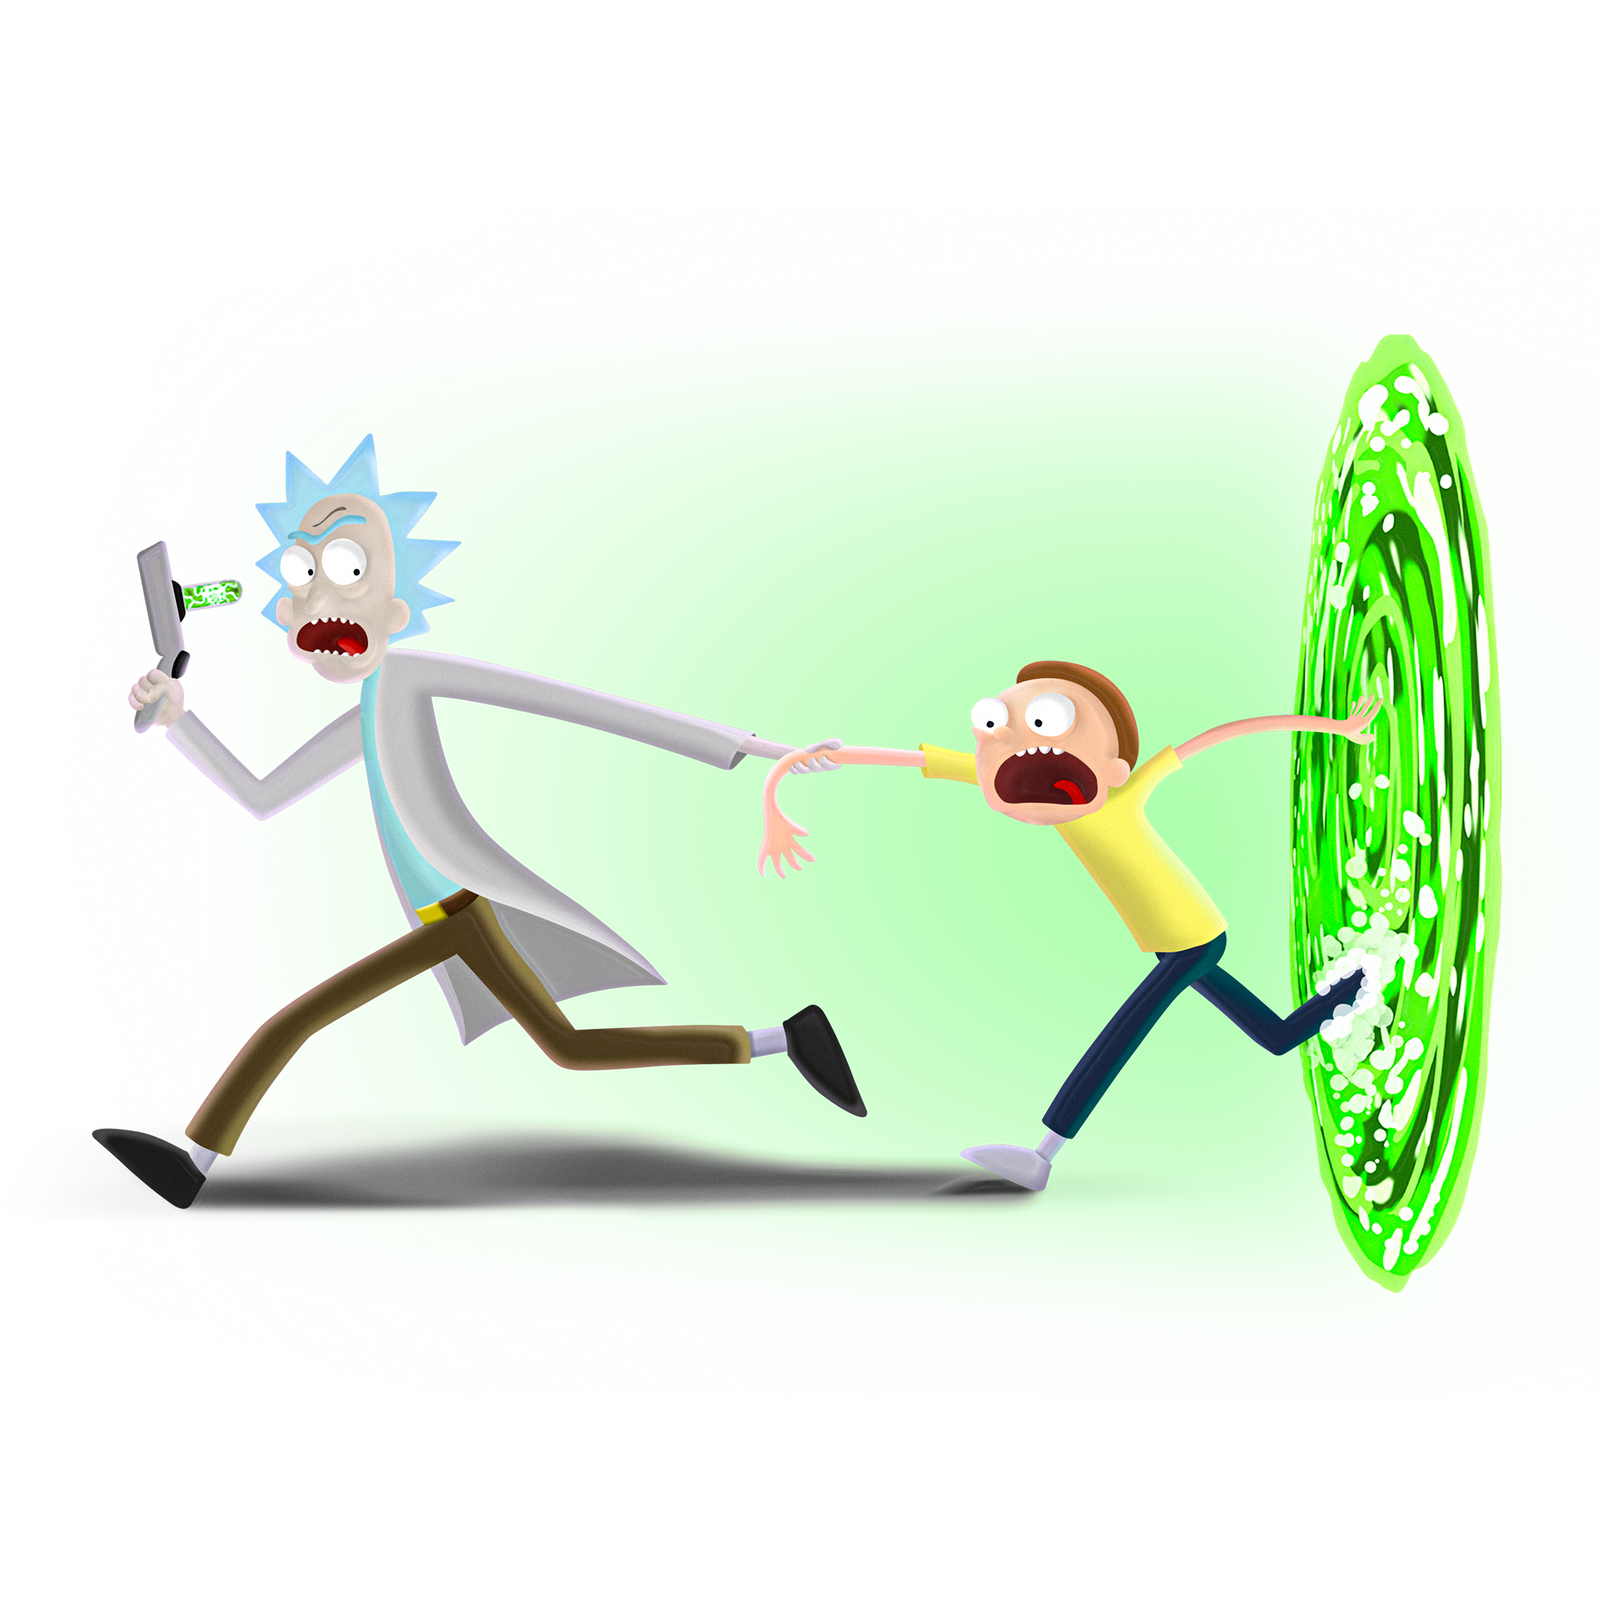 Rick and Morty logo.